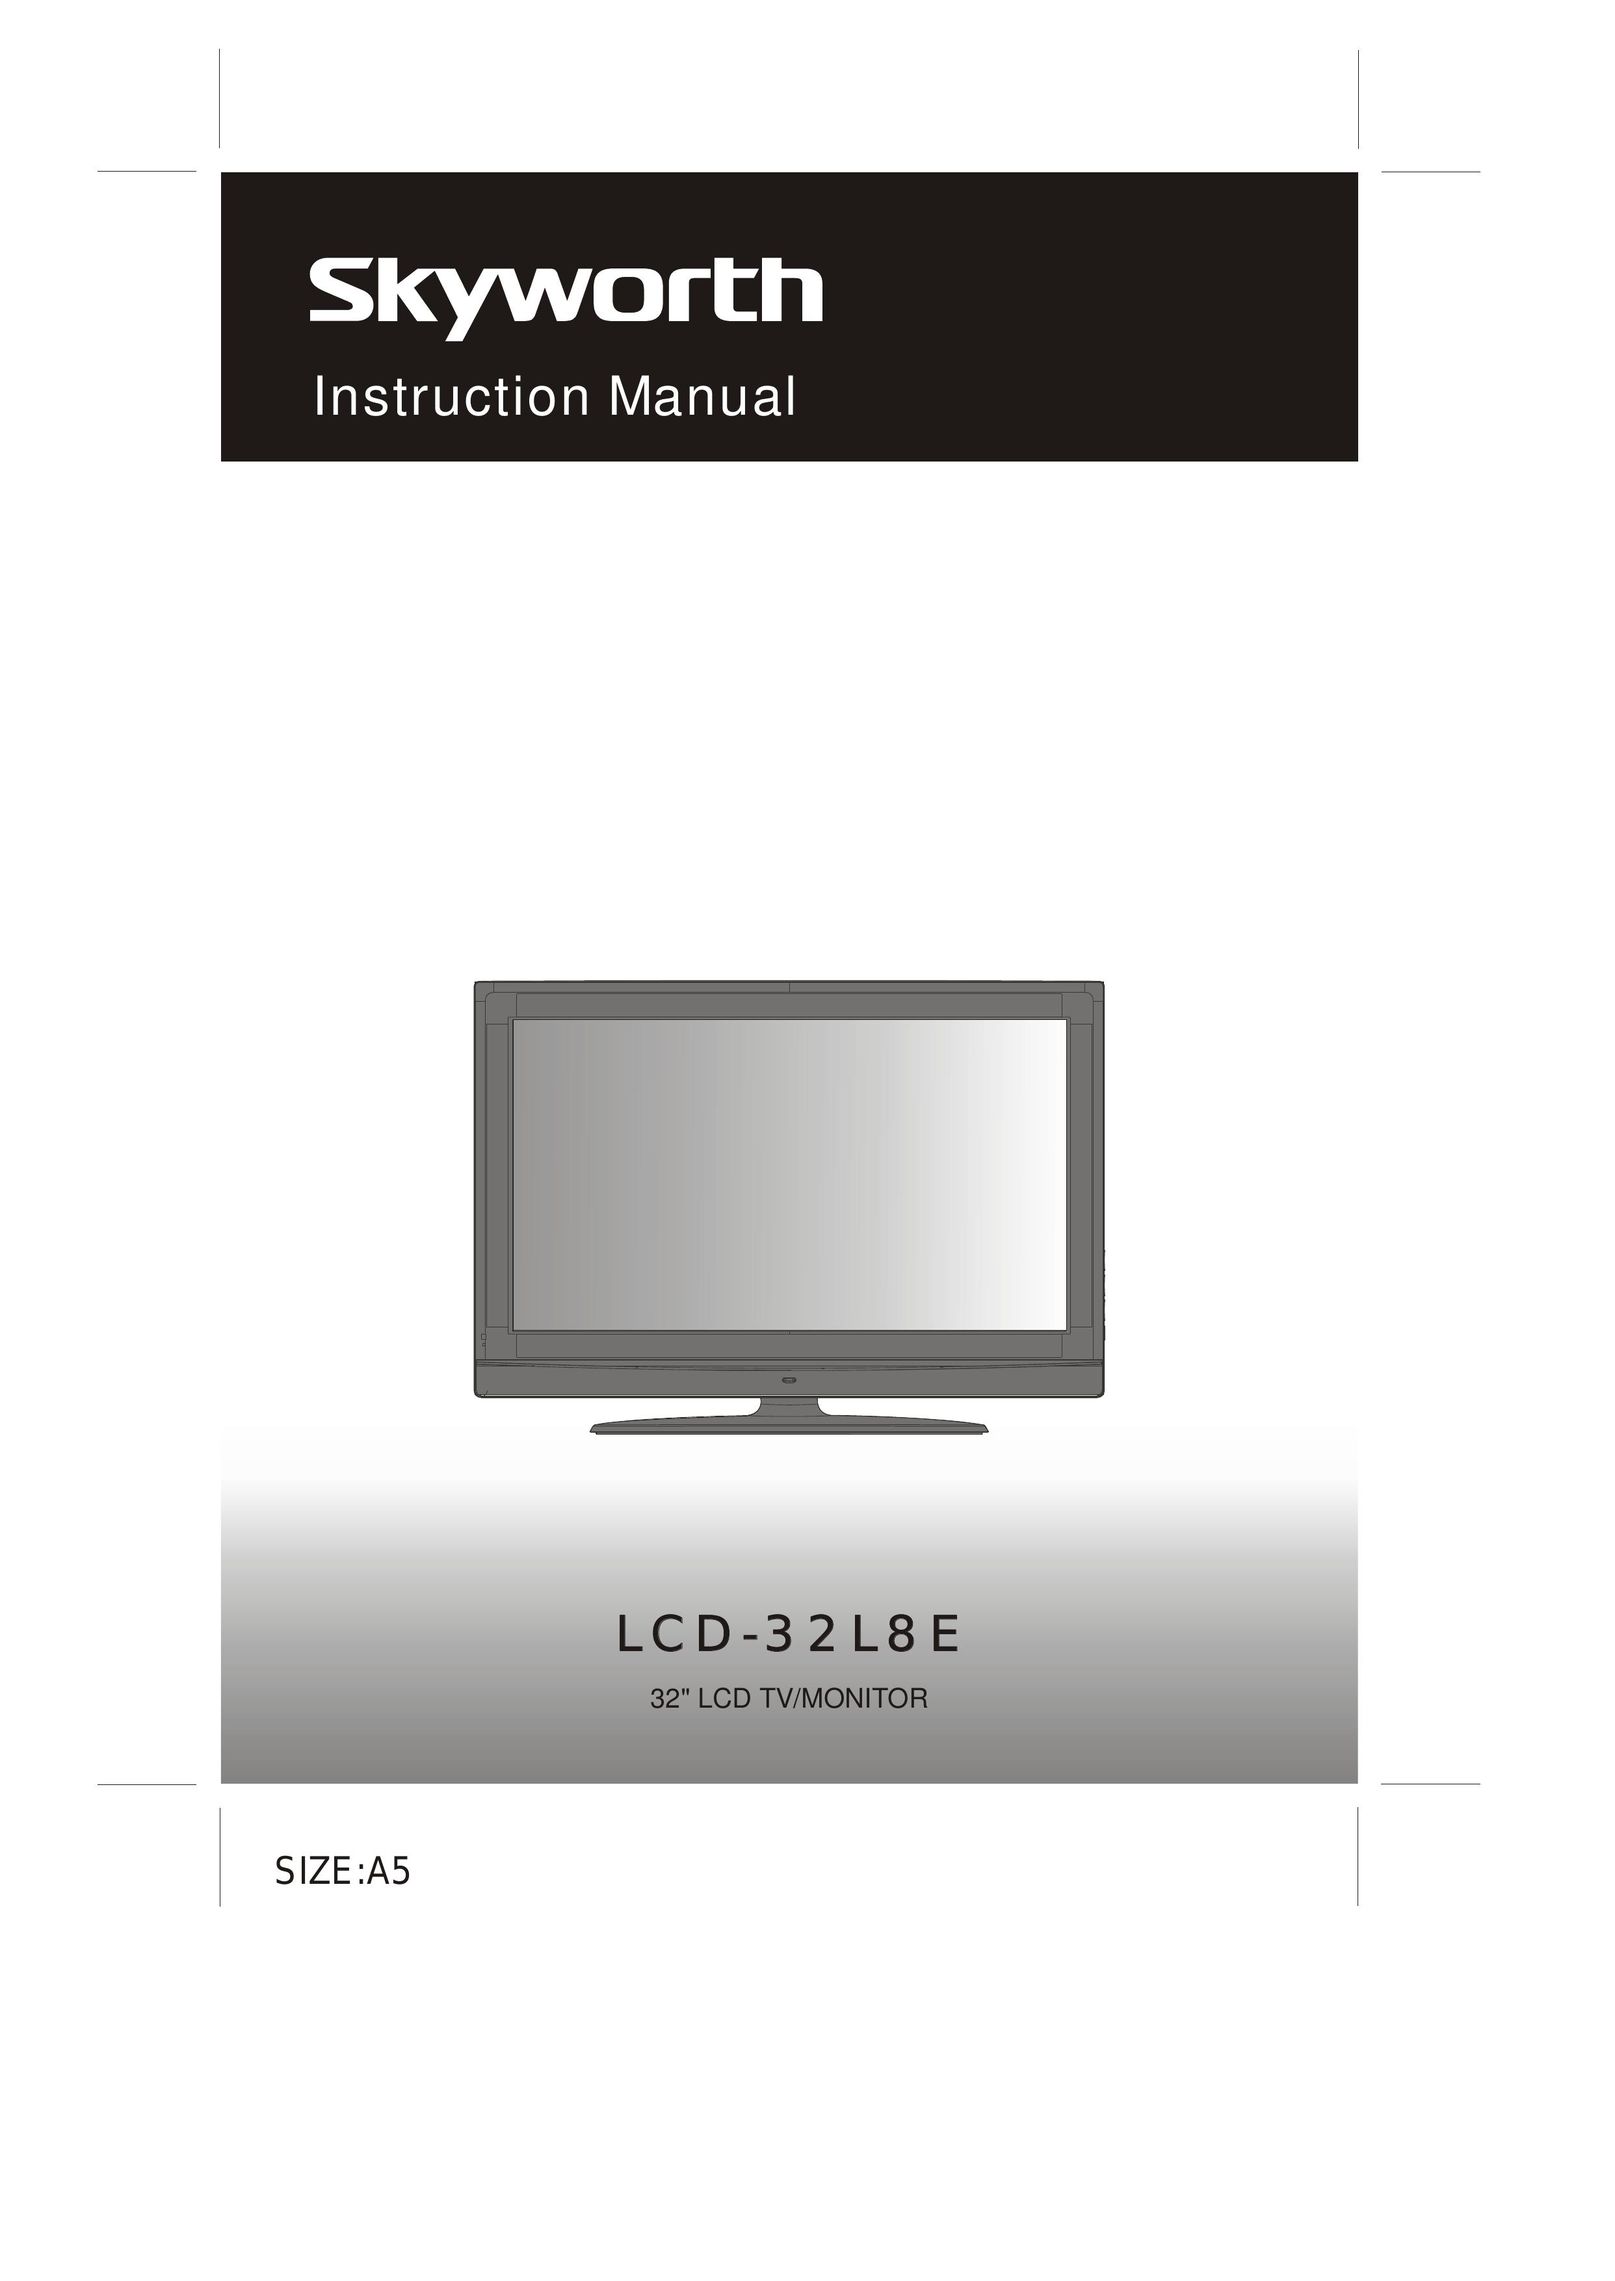 Skyworth LCD-32L8E Flat Panel Television User Manual